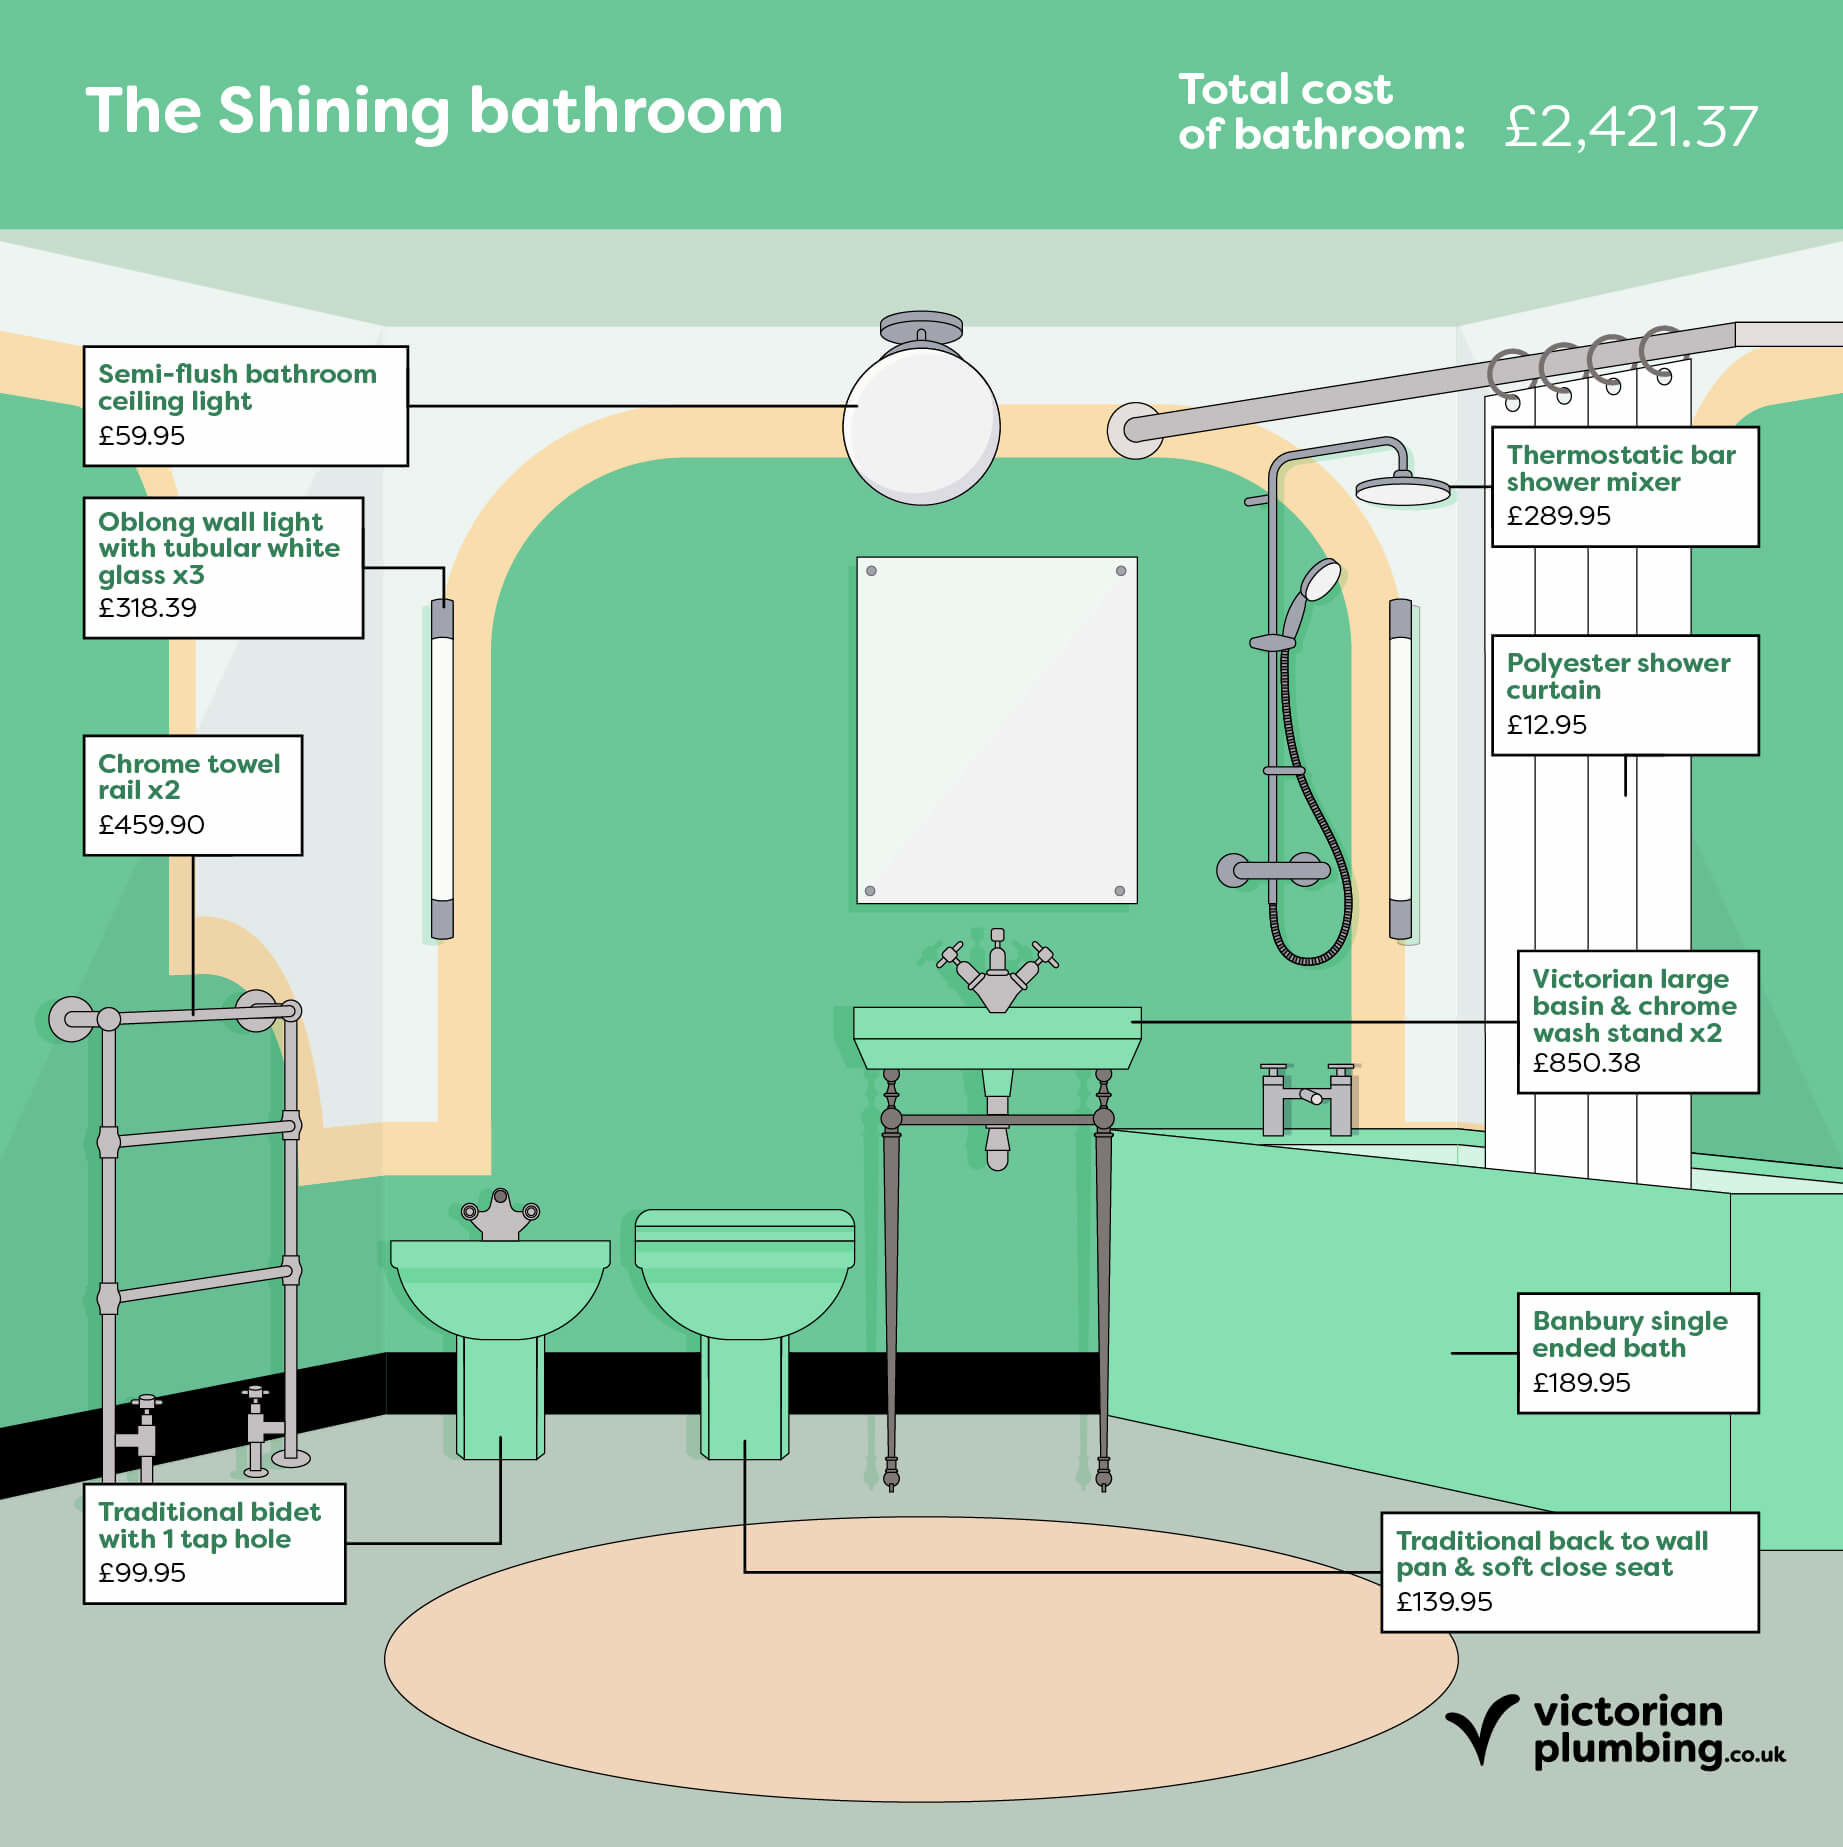 Fictional Bathroom: The Shining